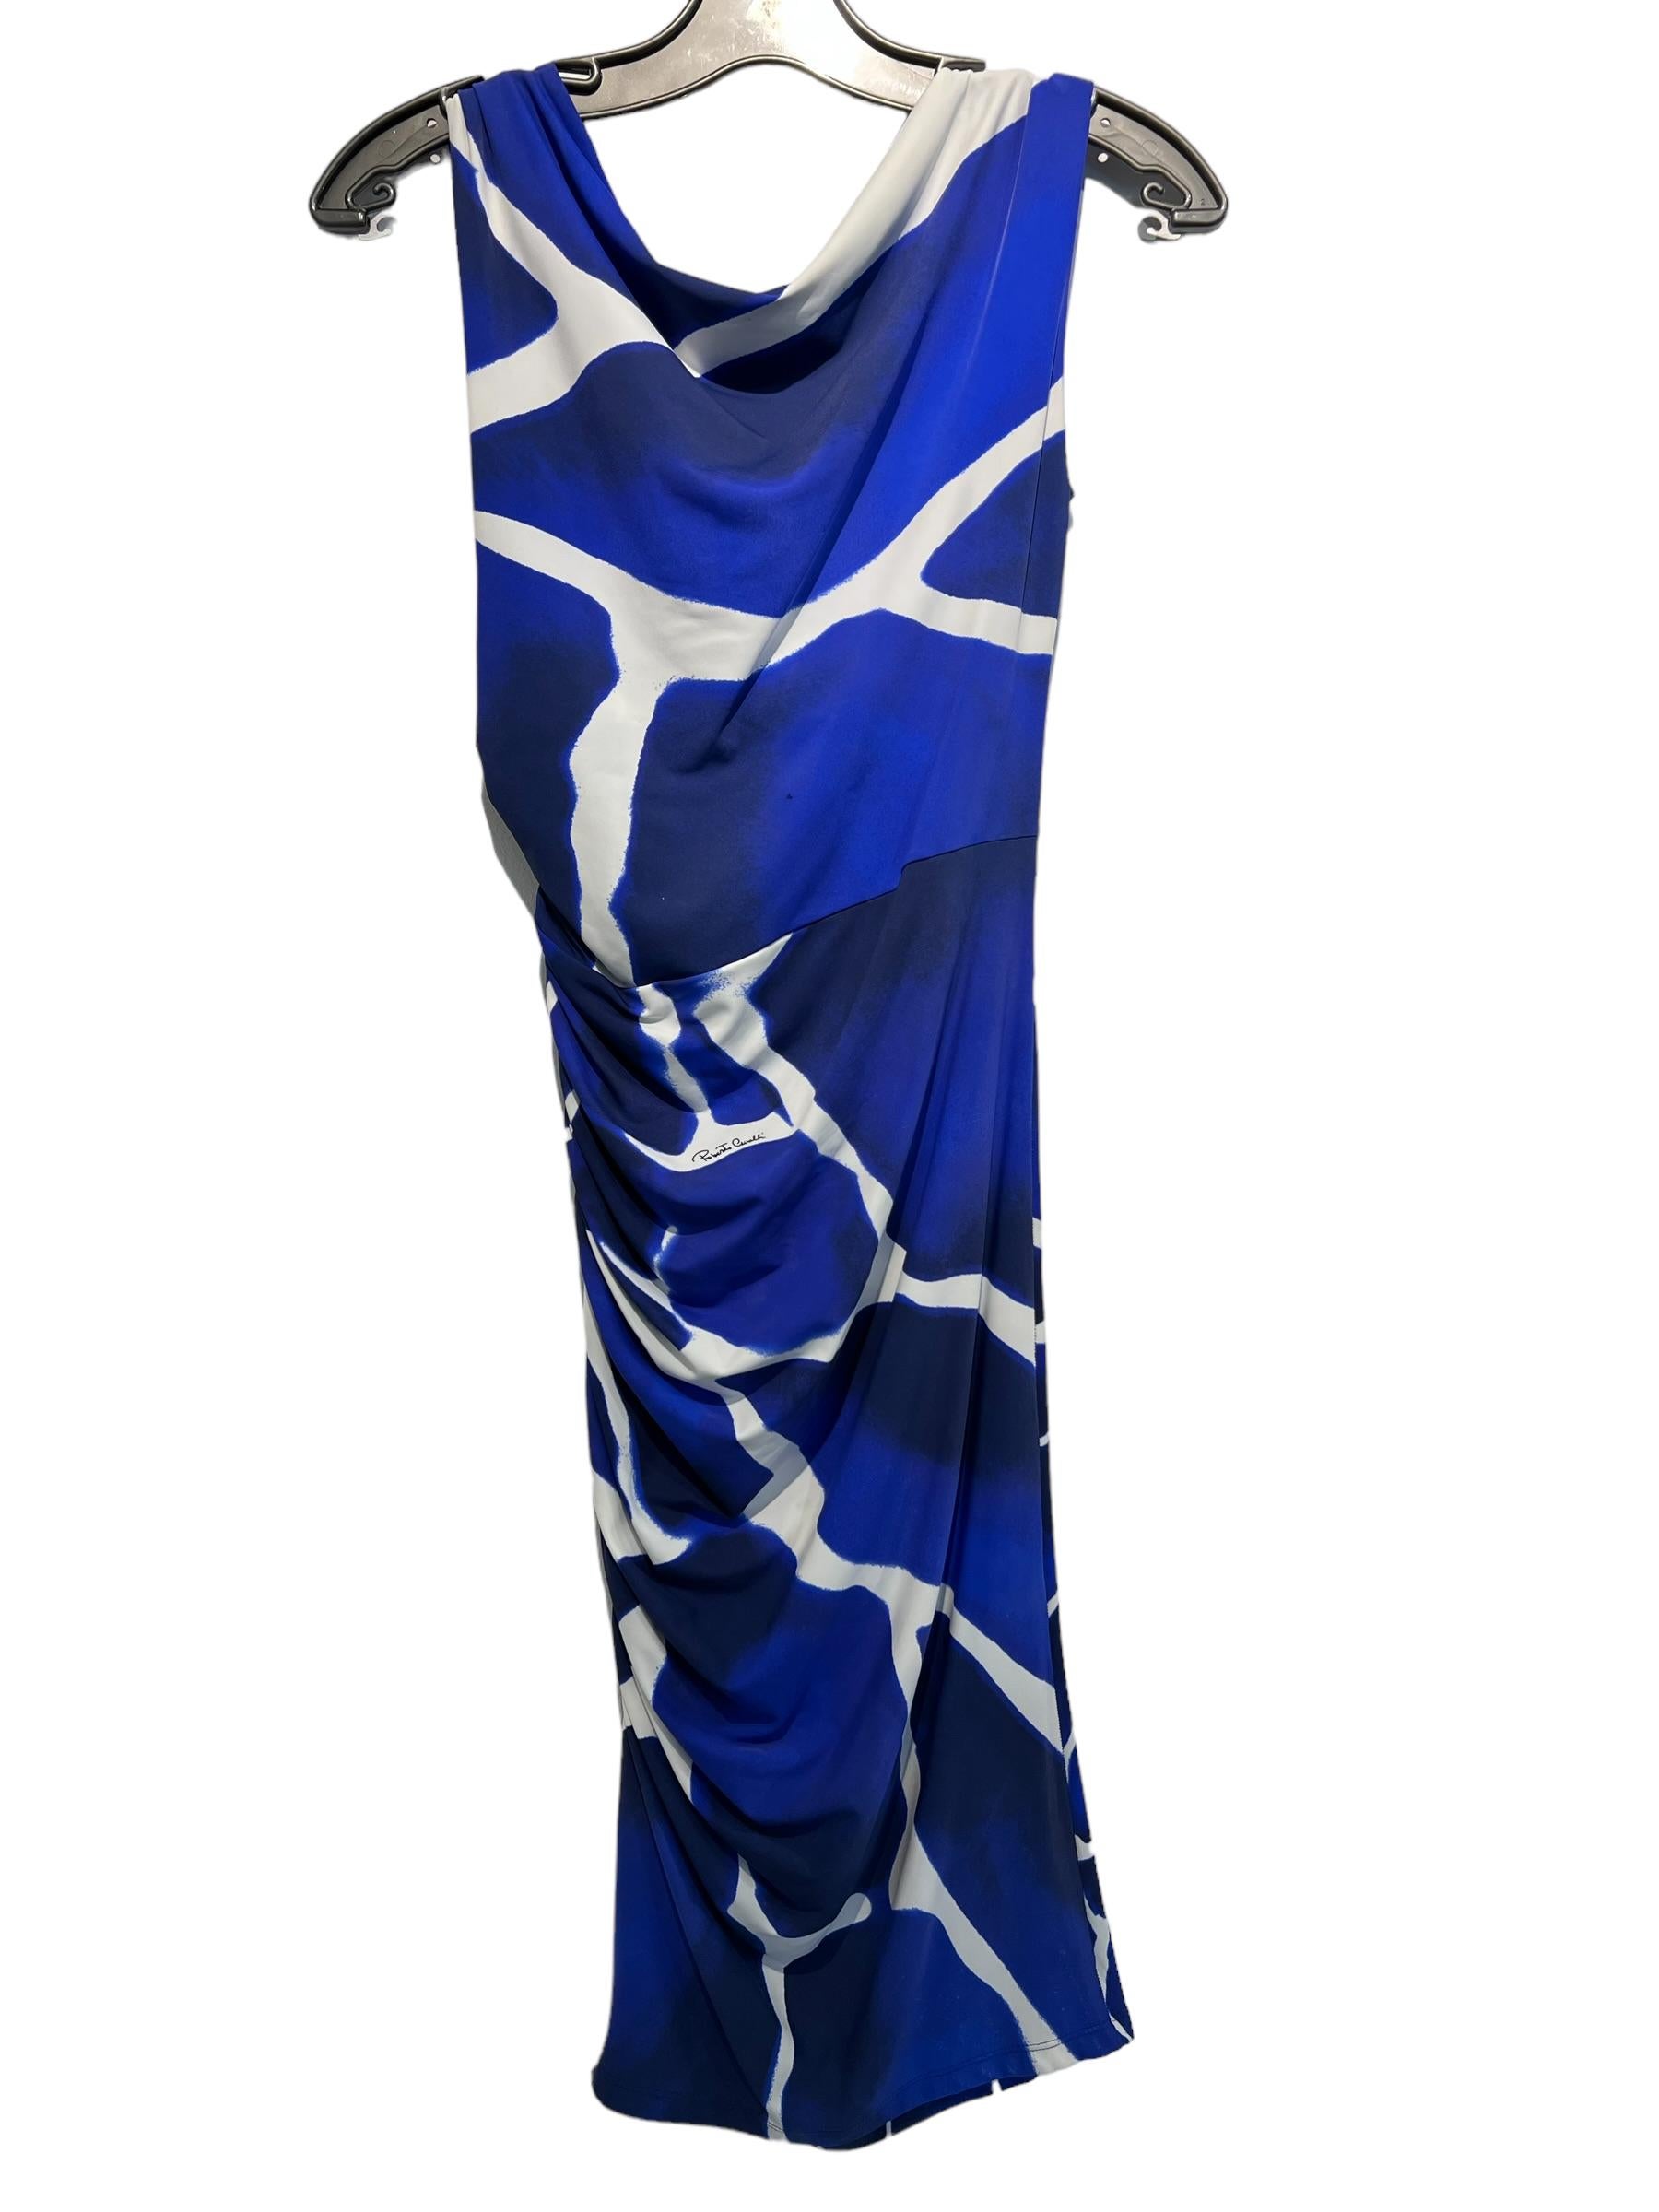 Purple Roberto Cavalli Sleeveless White Animal Print Dress Size 44